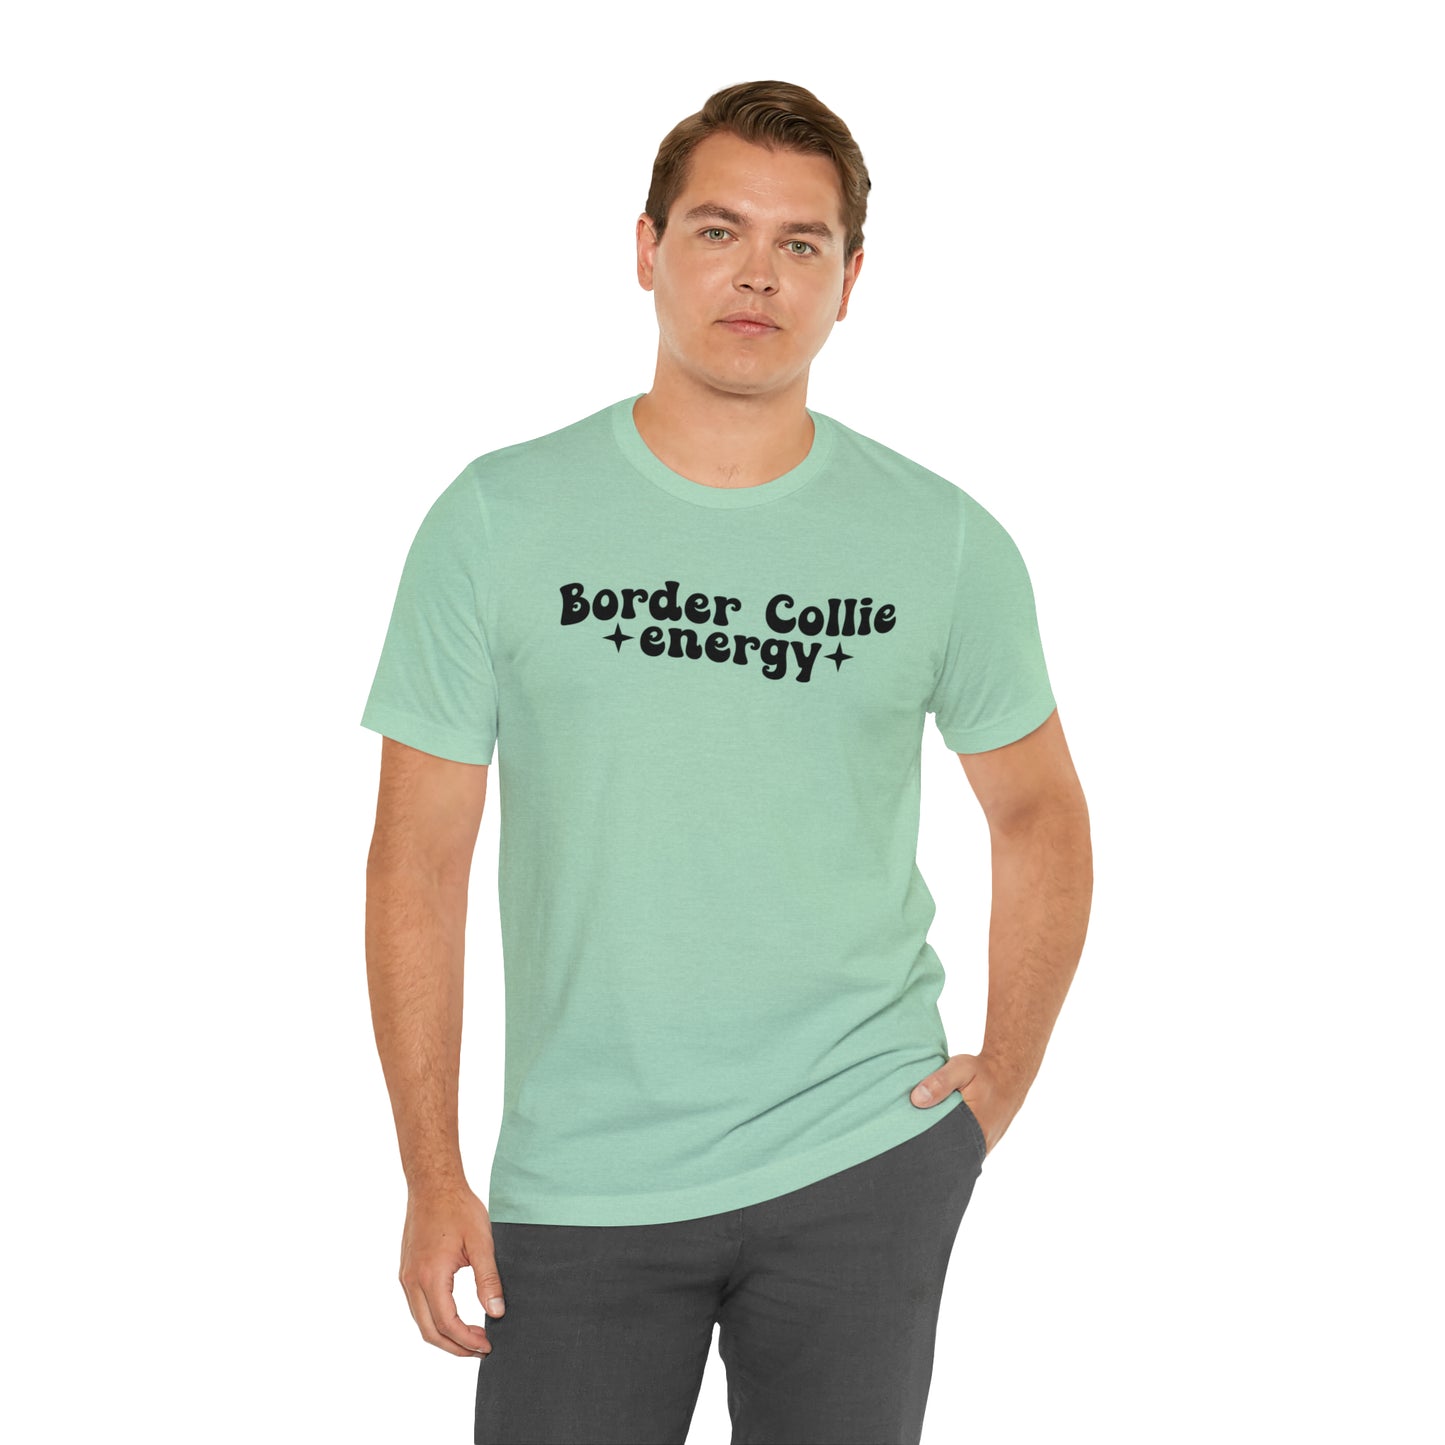 Border Collie Energy dog Short Sleeve T-shirt